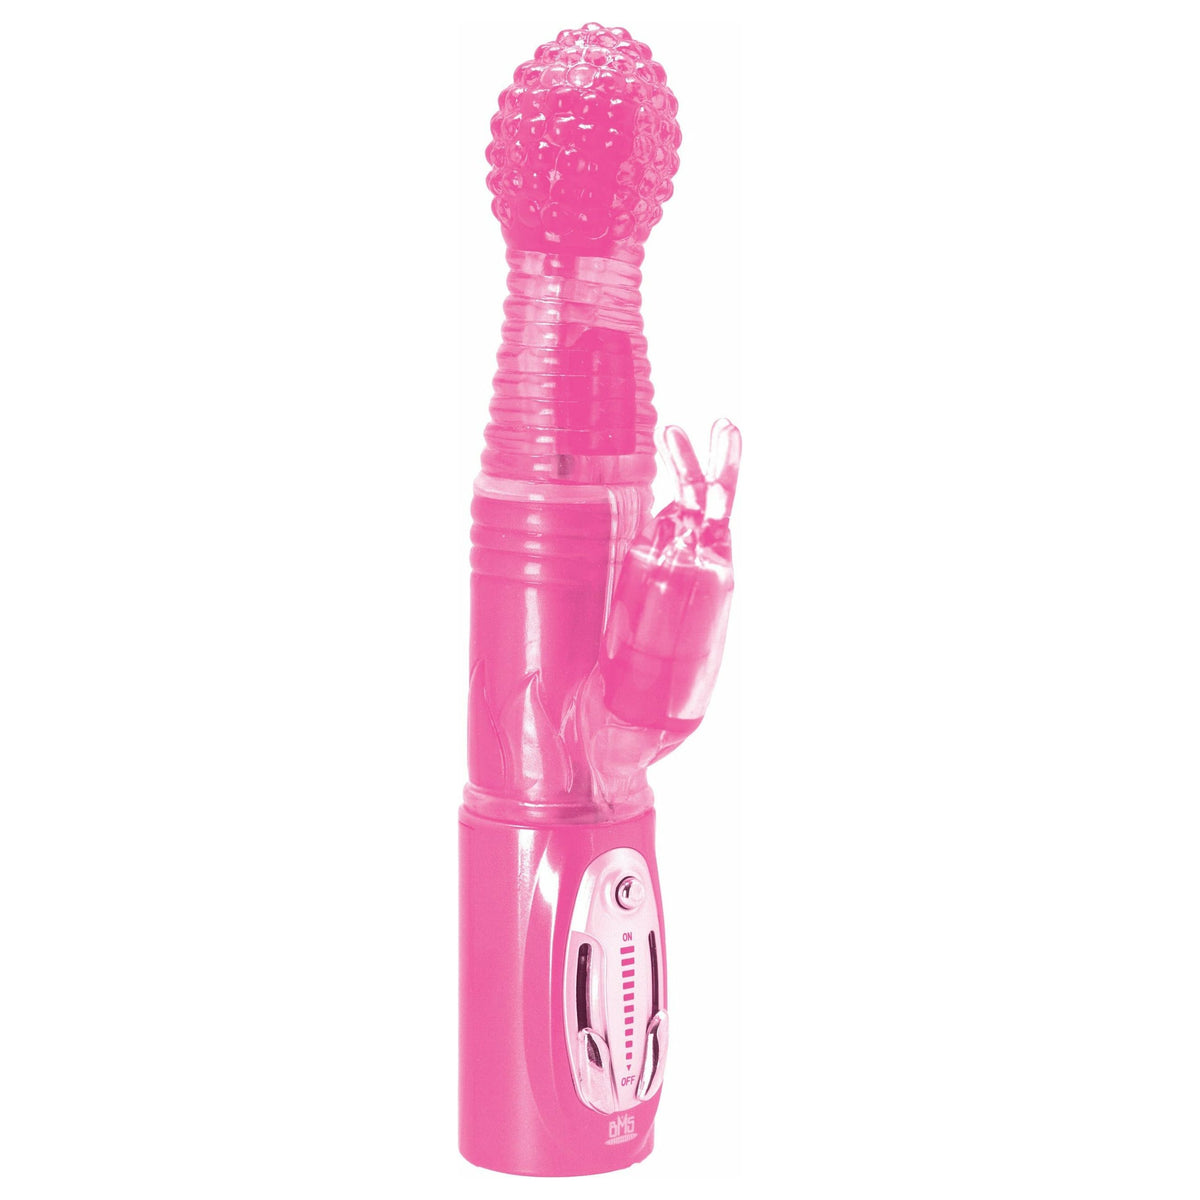 First Tingle - Soft Sensations Vibrator - Pink